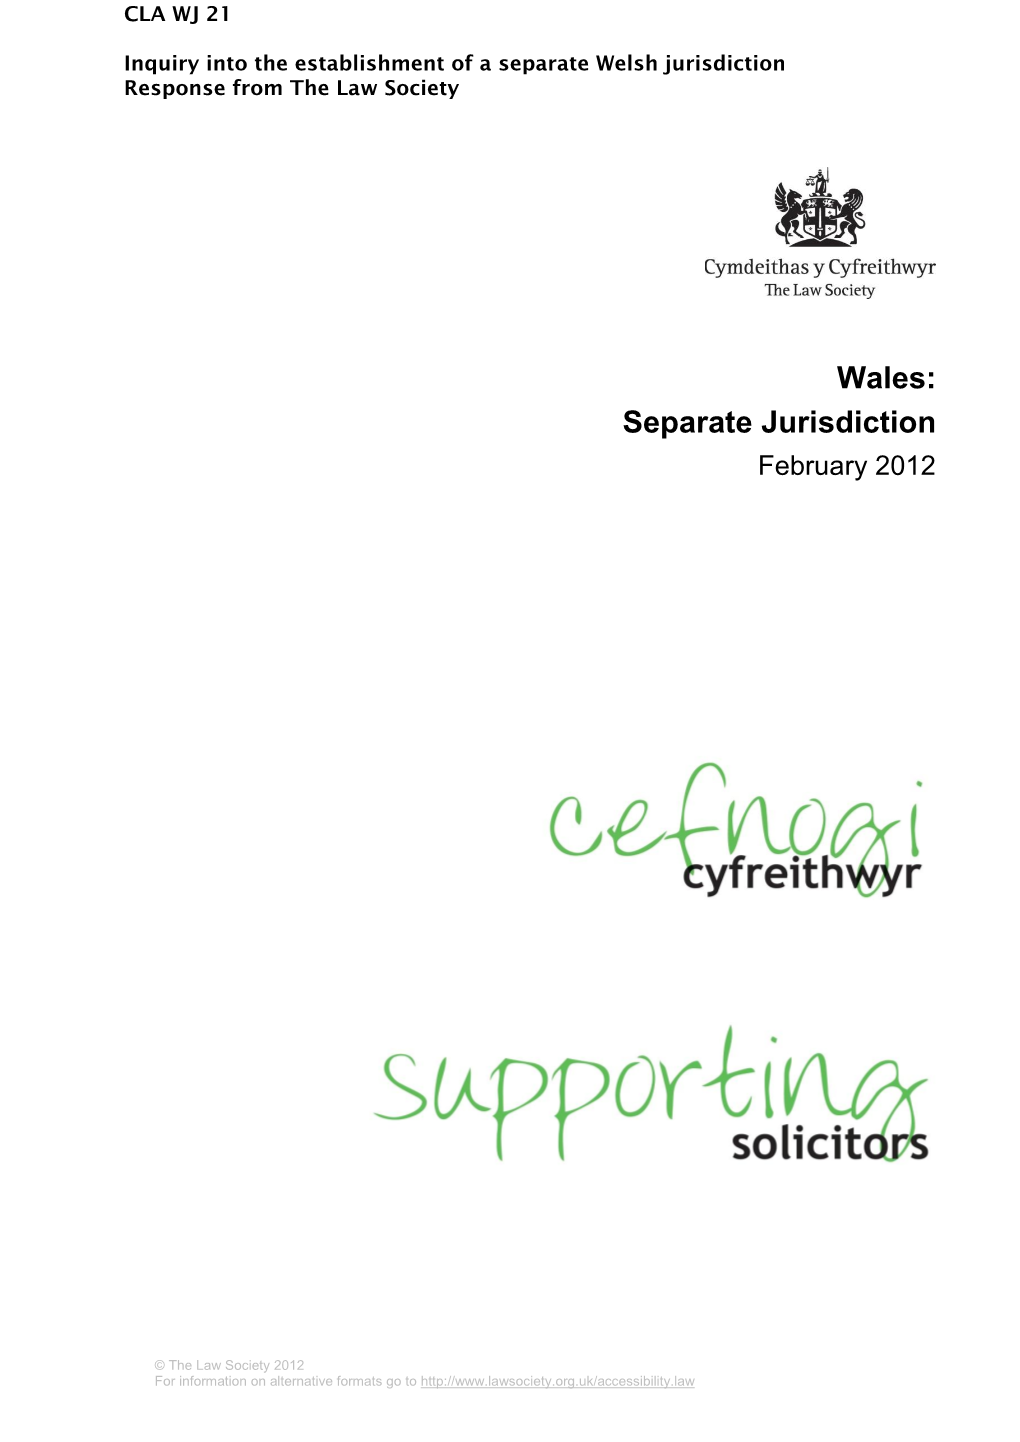 Wales: Separate Jurisdiction